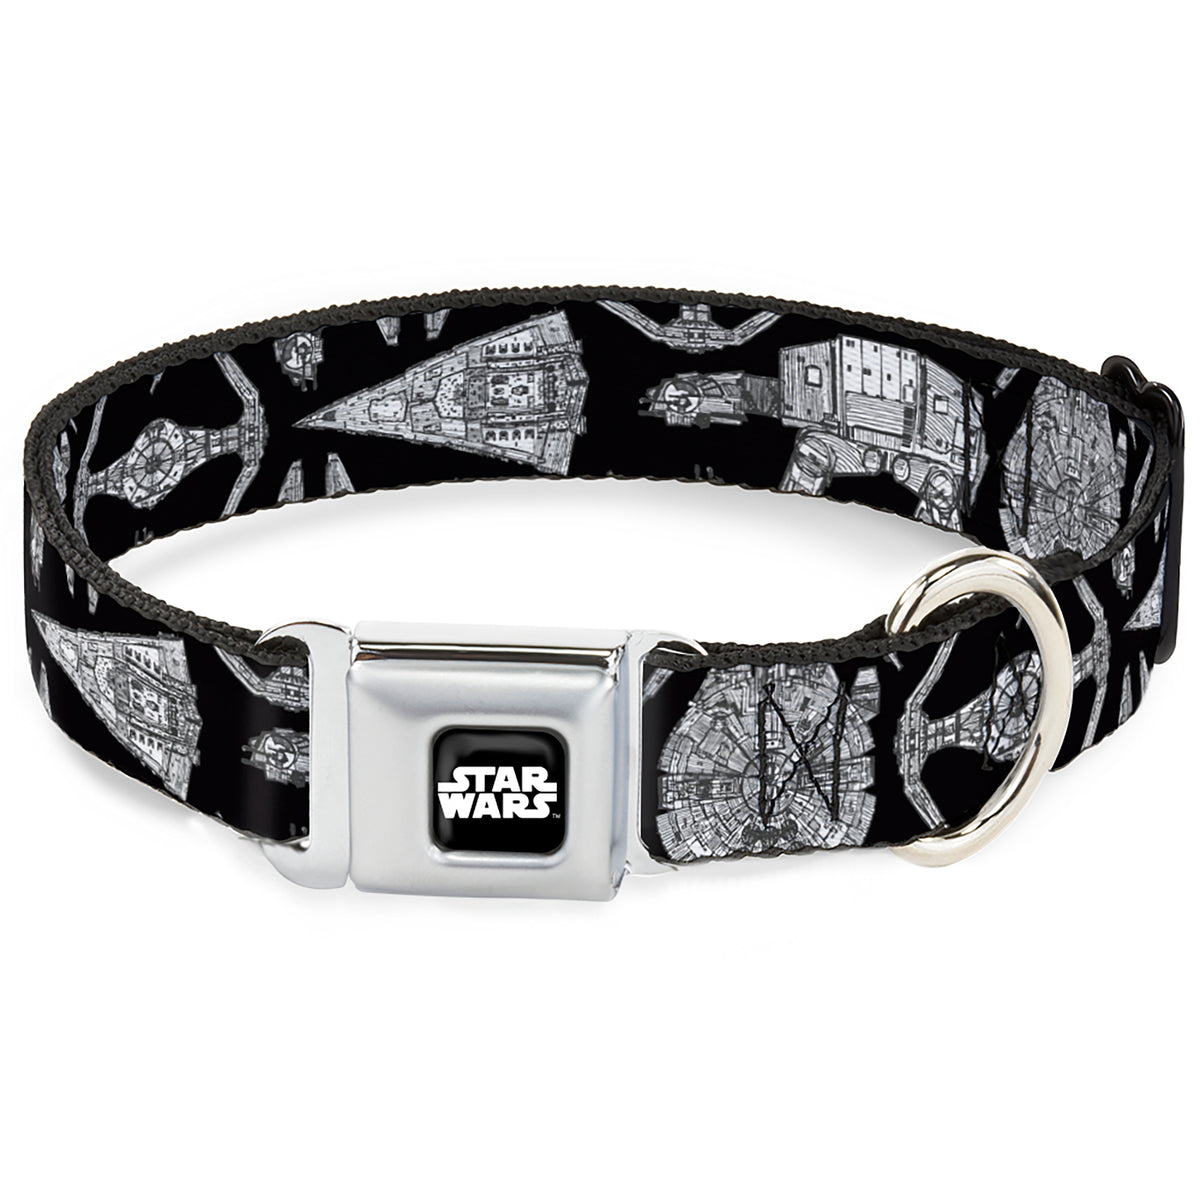 Buckle Down Star Wars Boba Fett Seatbelt Buckle Pet Collar - Small, 1 Wide - Fits 9-15 Neck